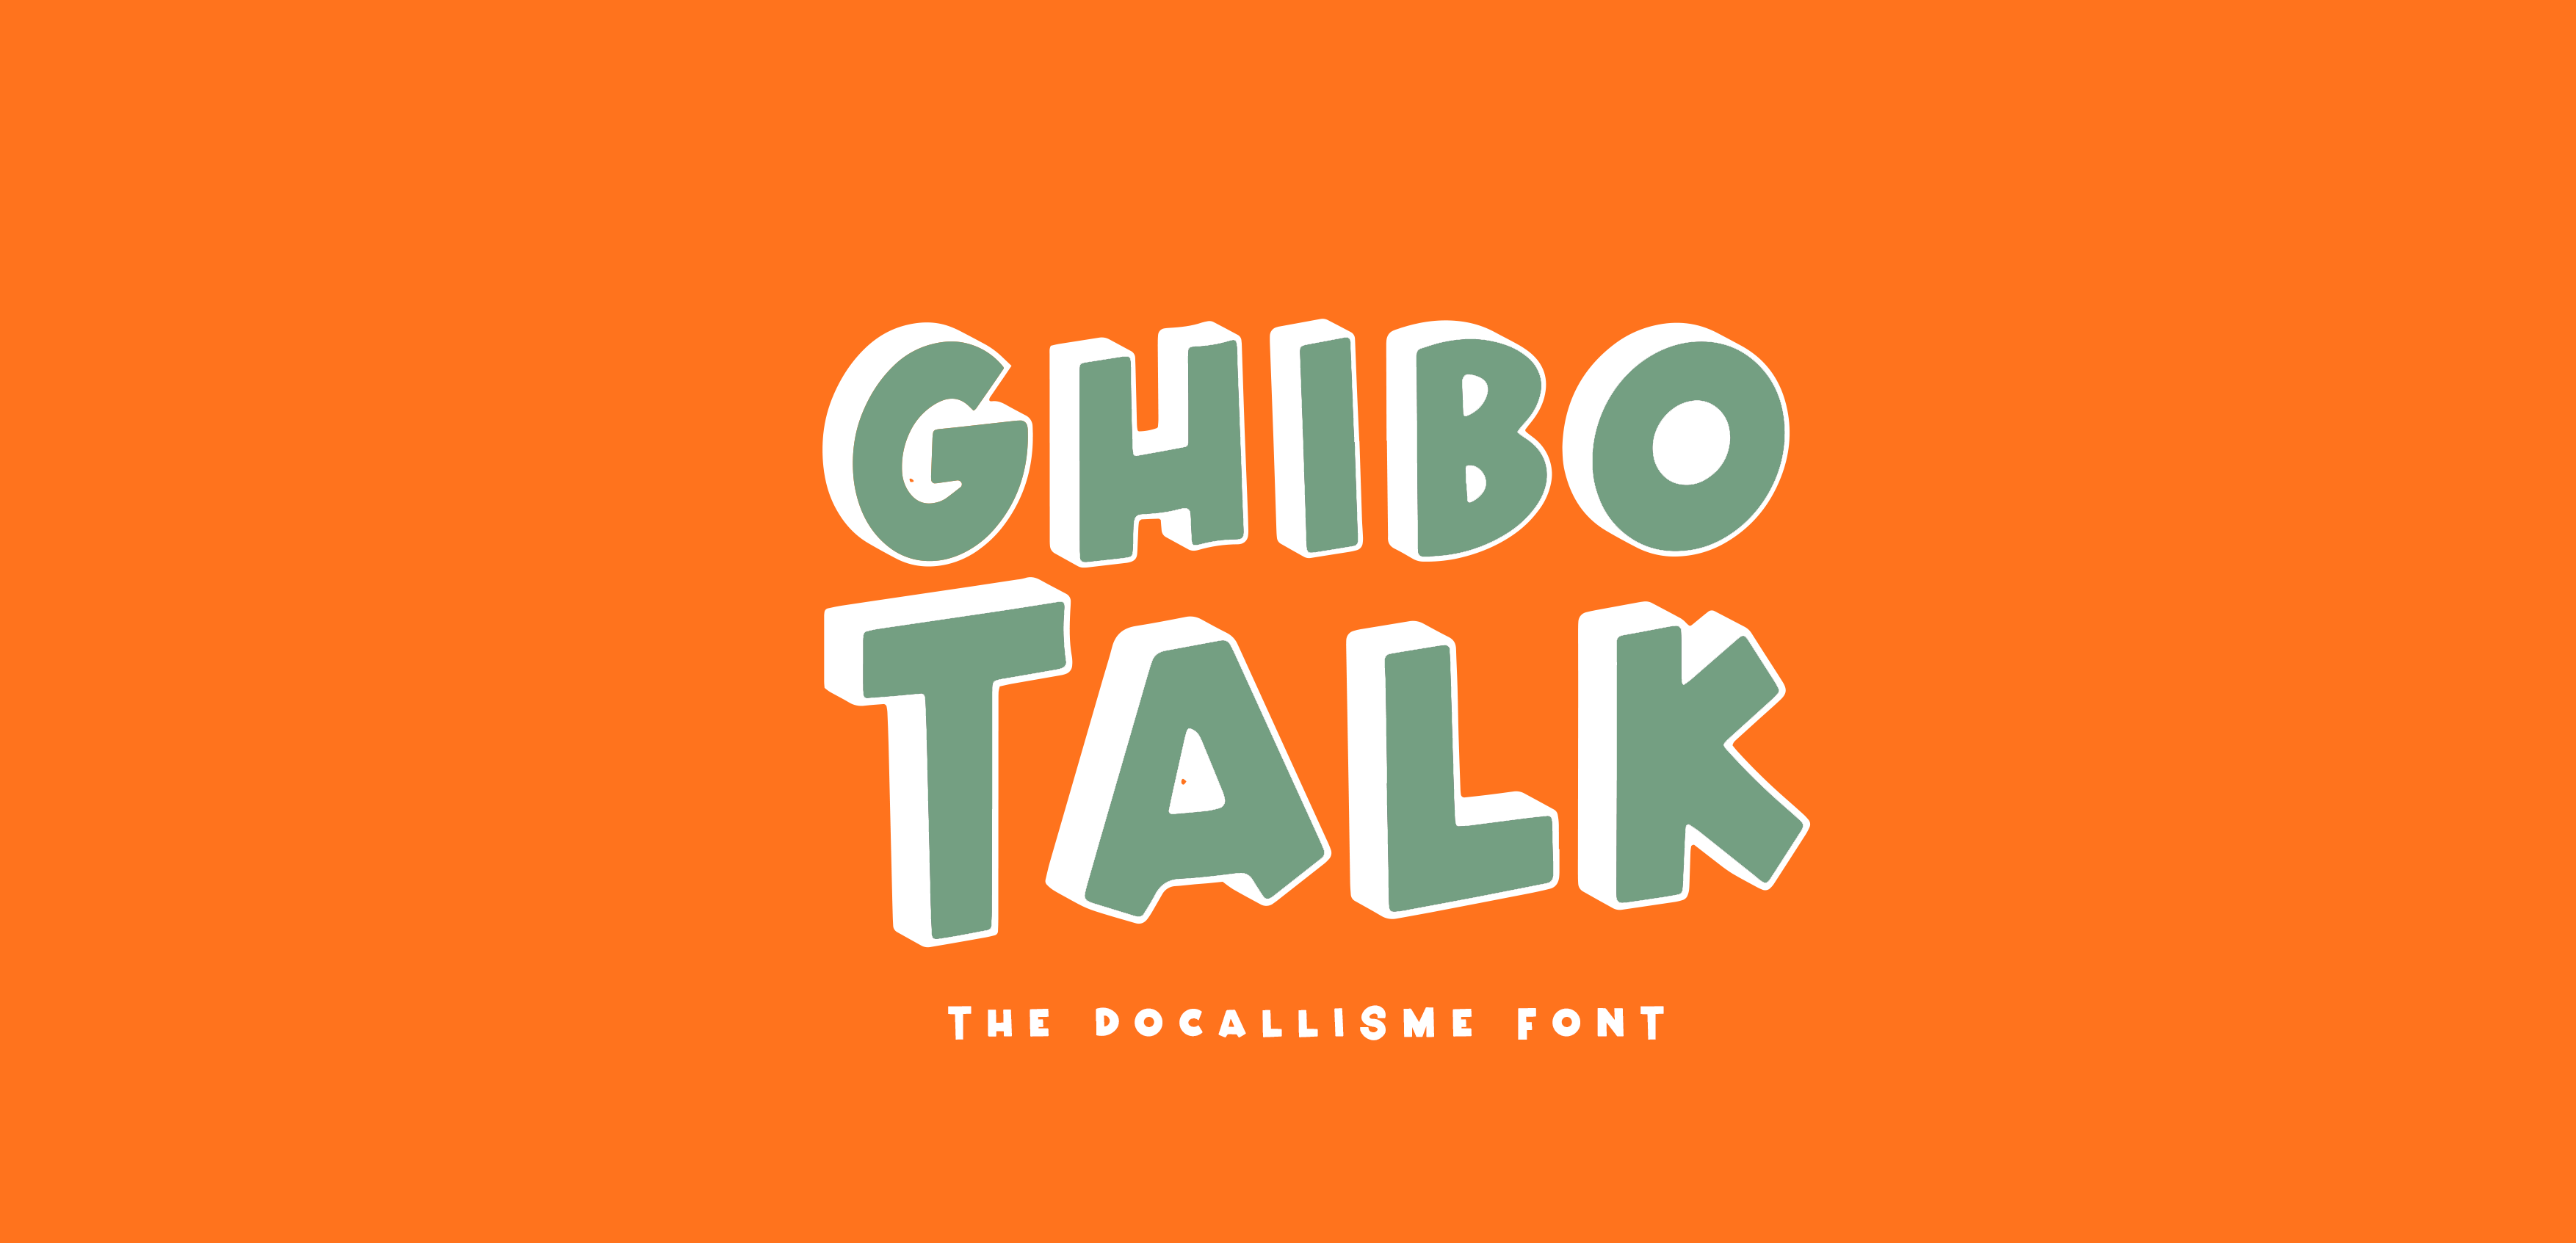 Ghibo Talk